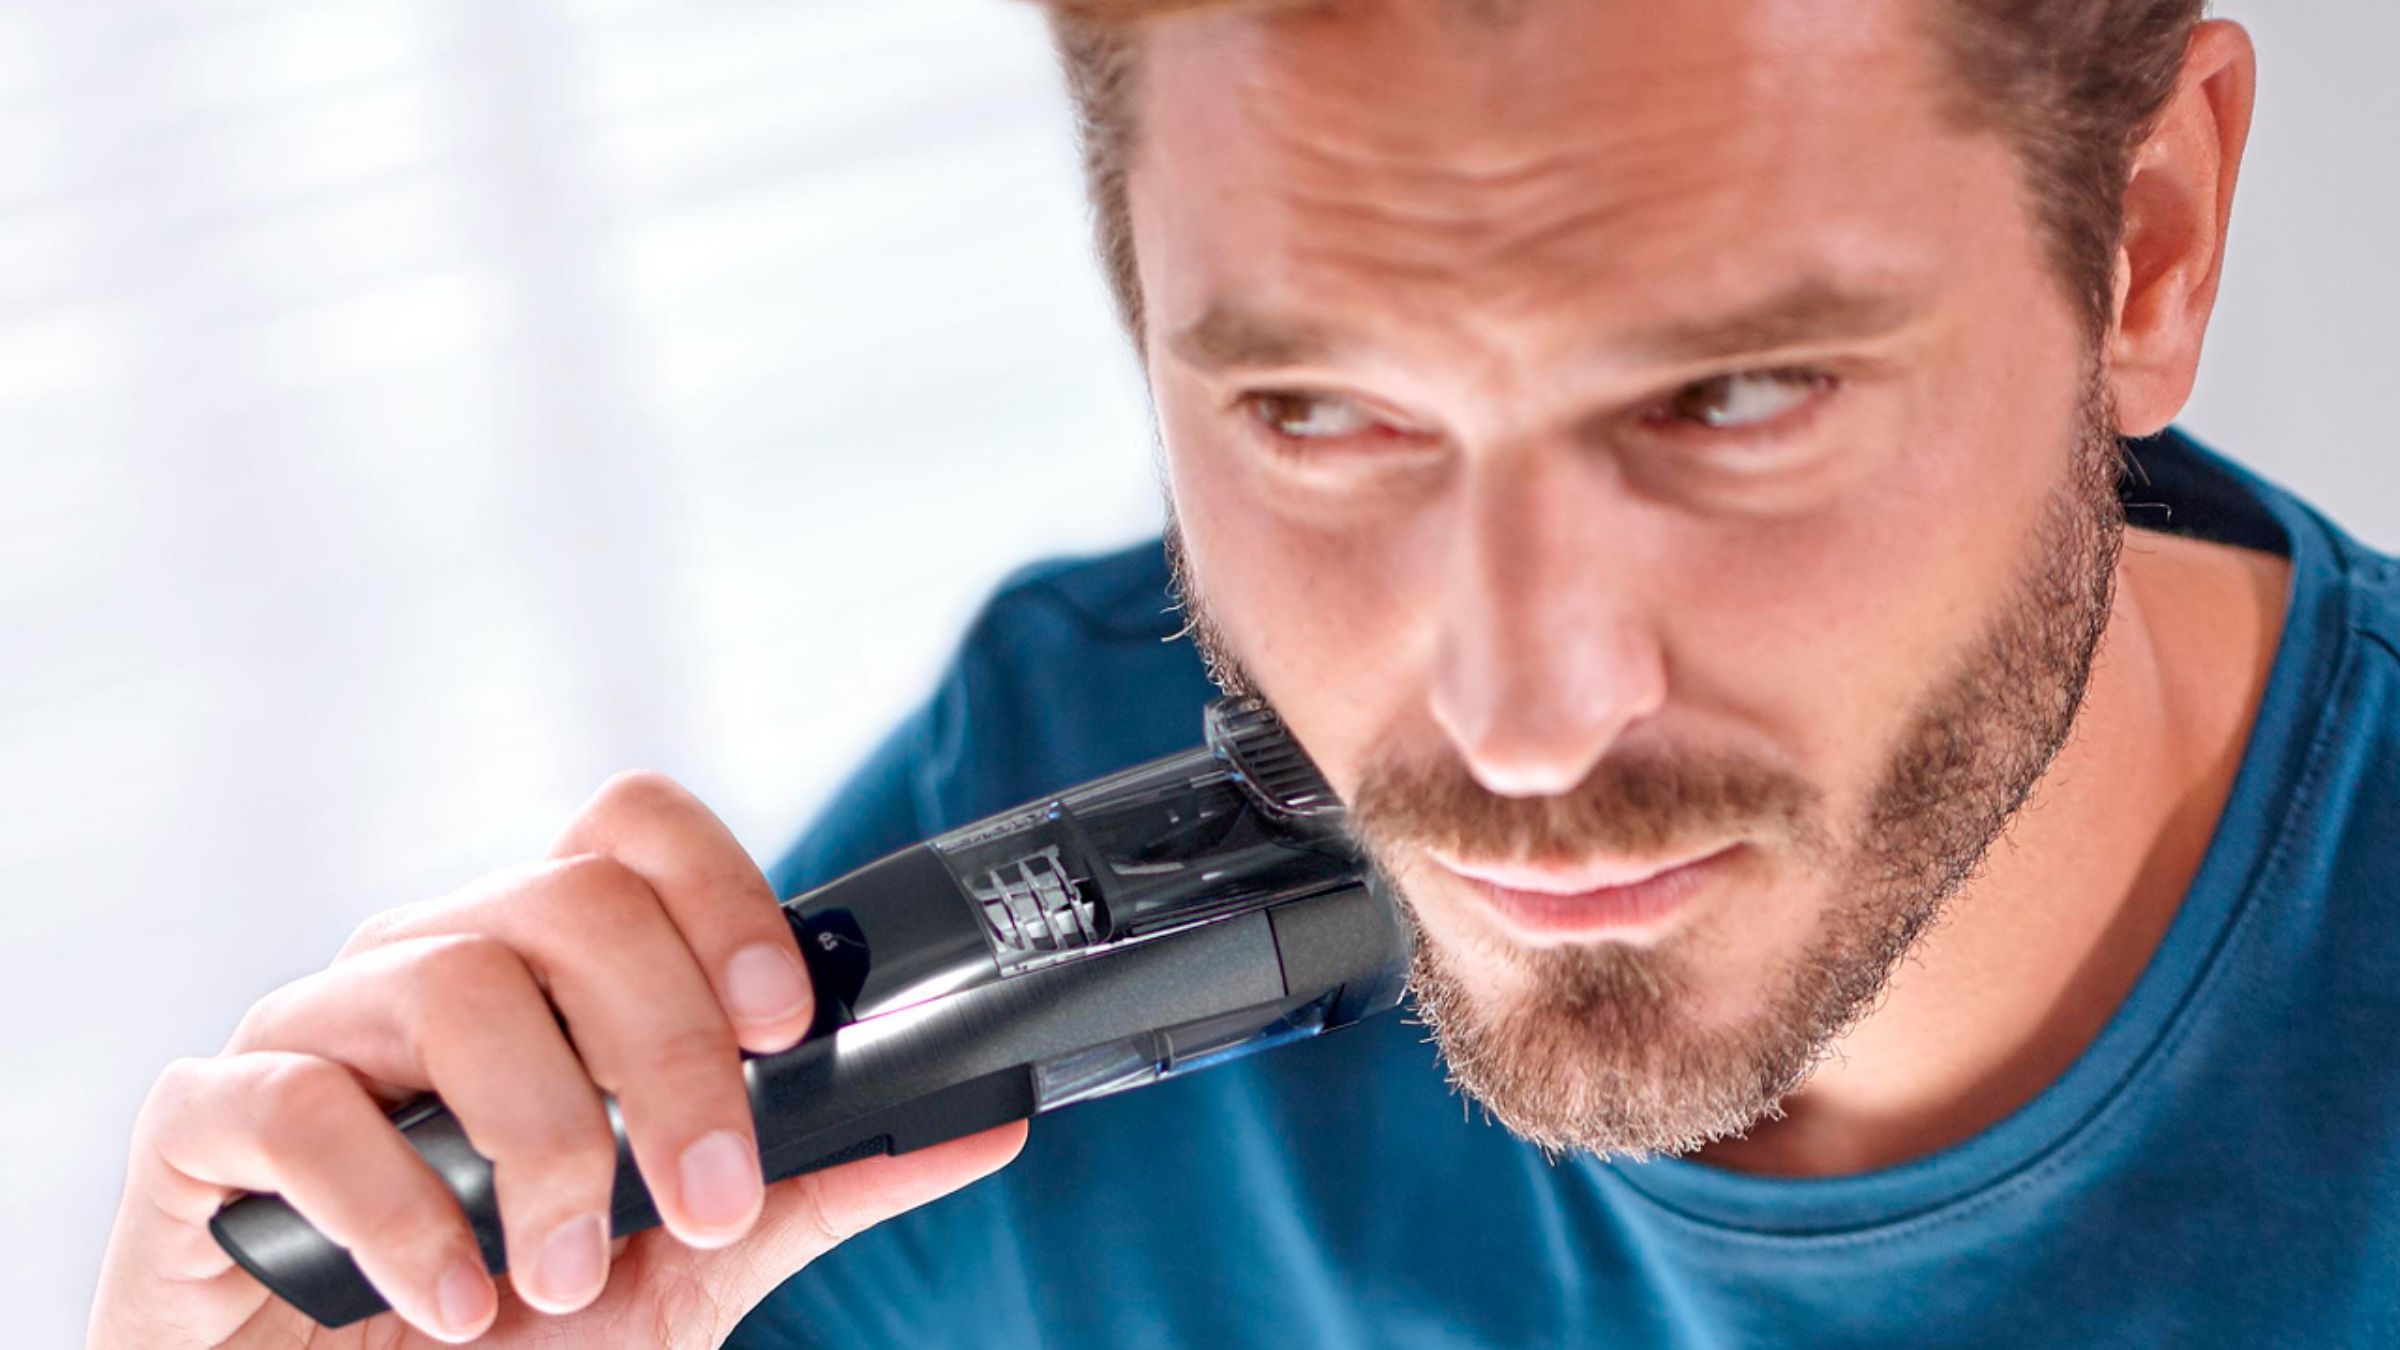 philips beard hair trimmer